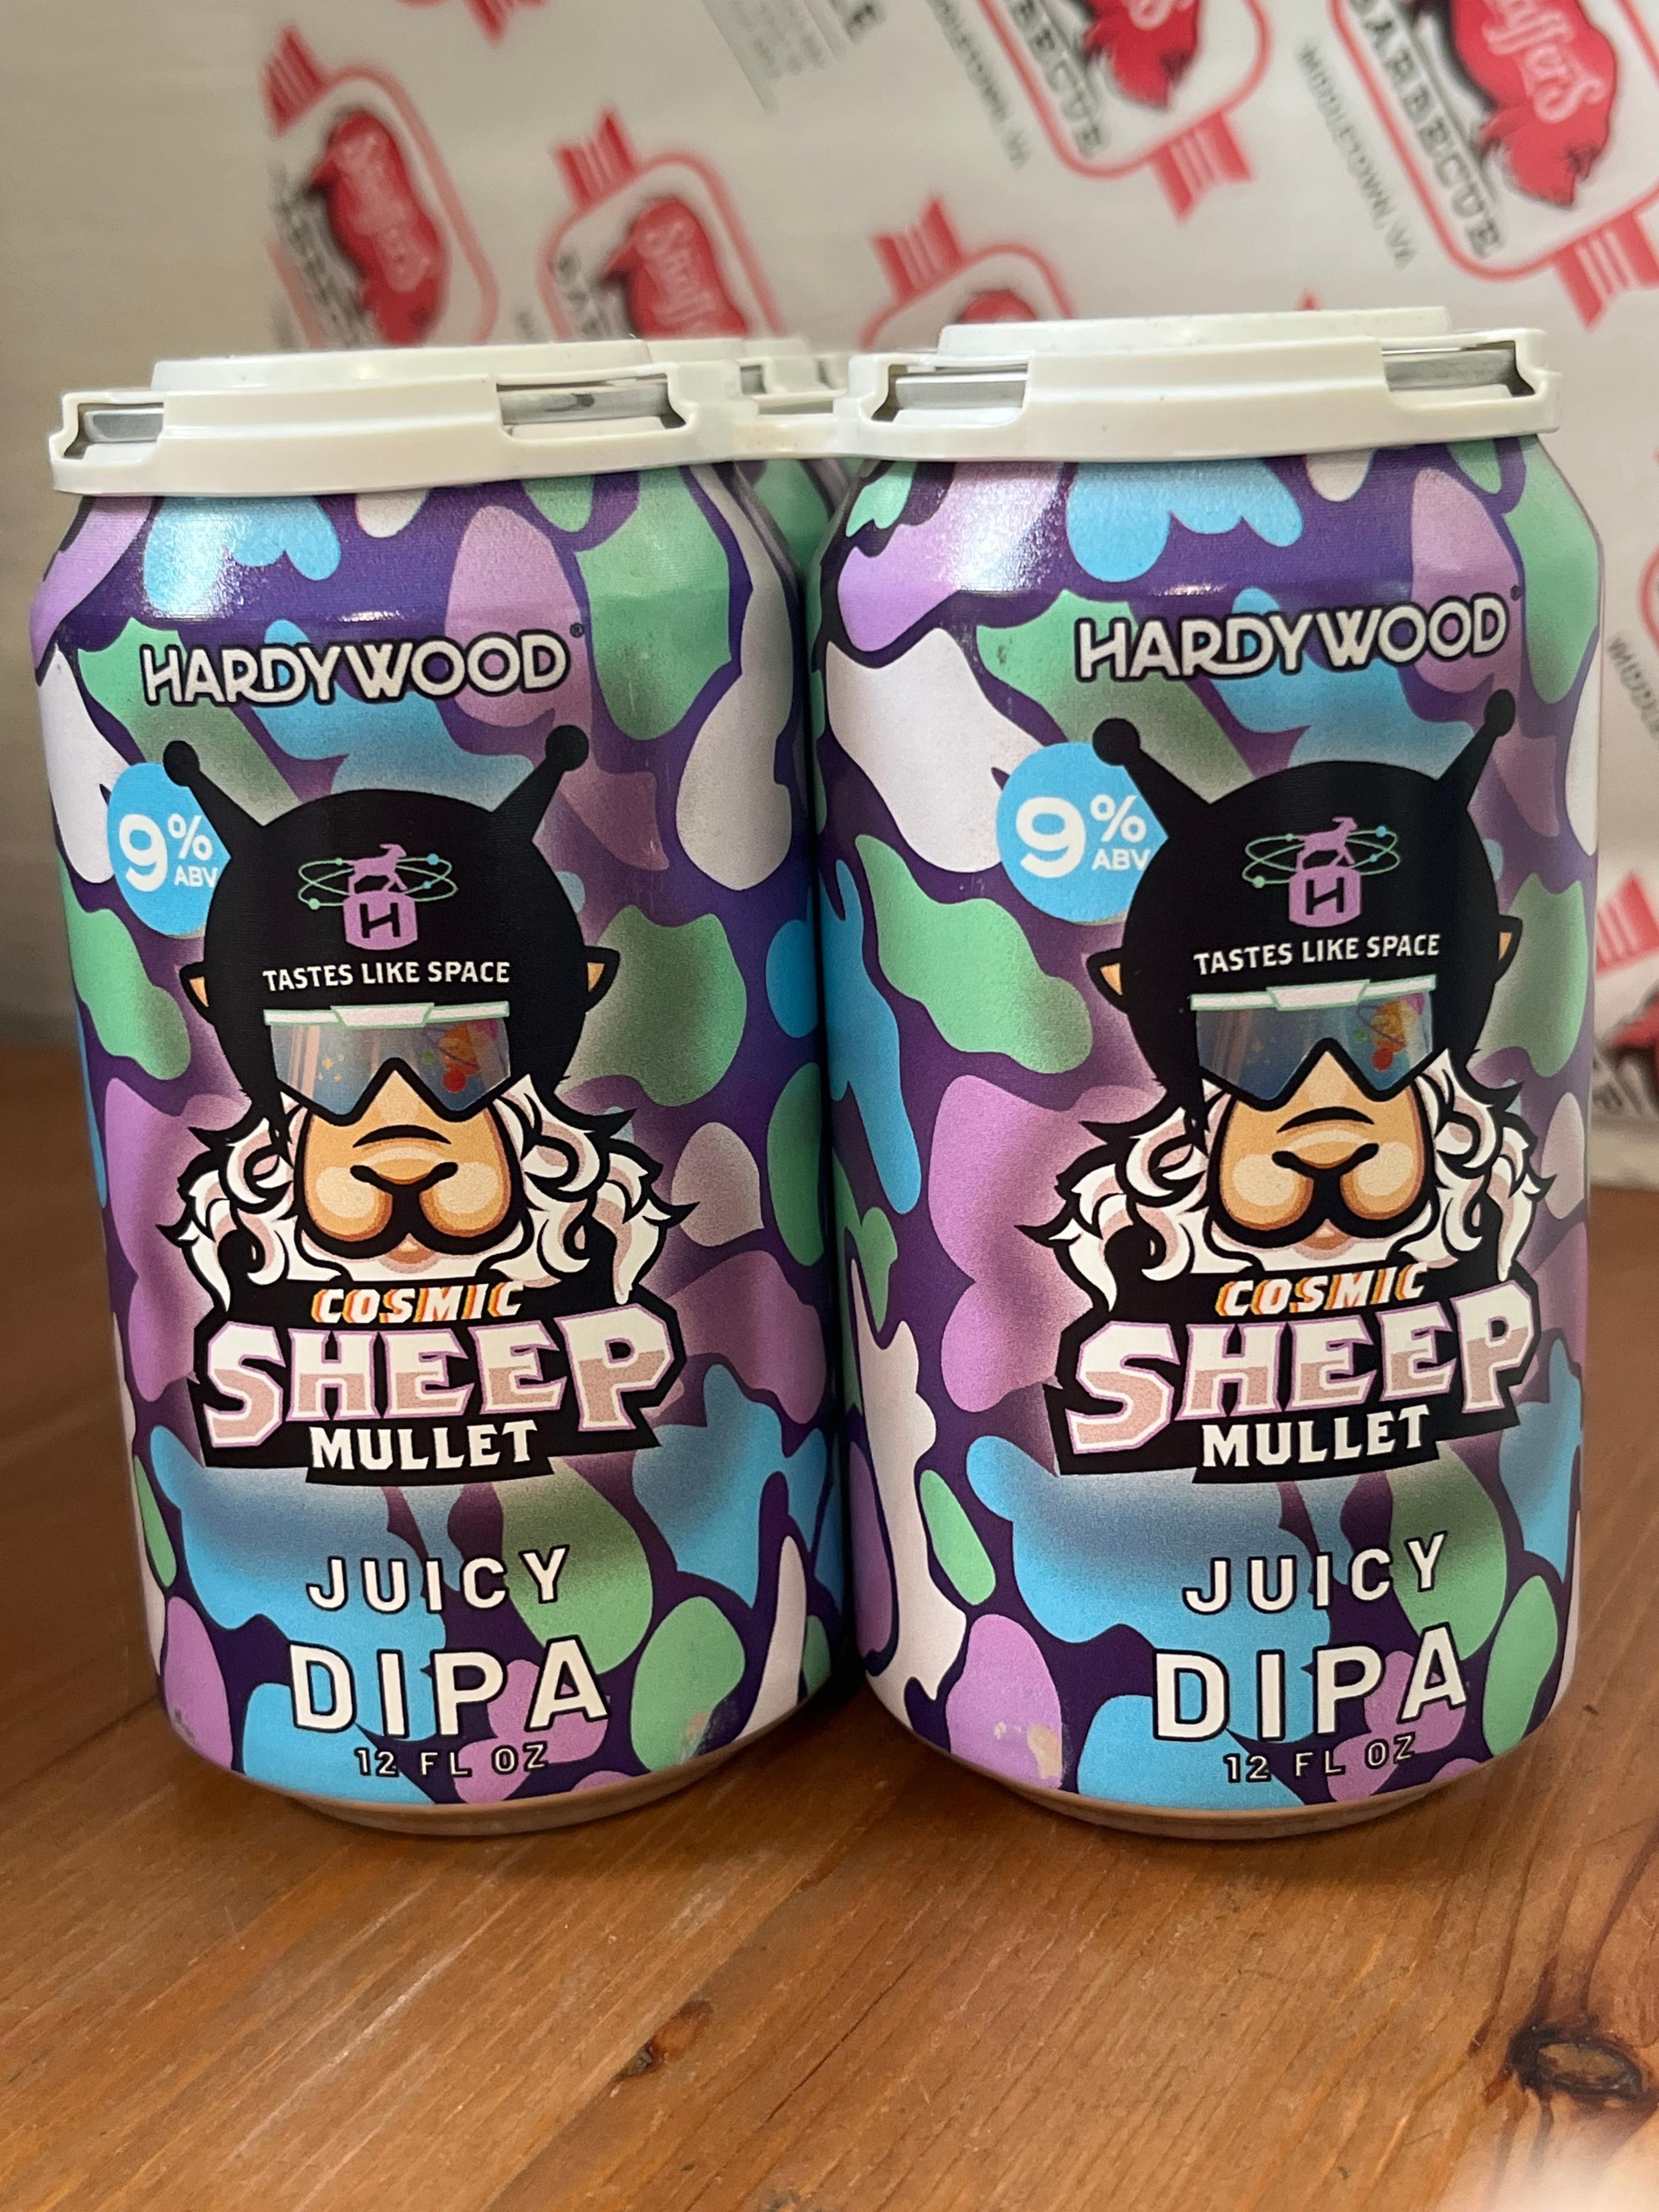 Hardwood Cosmic Sheep Juicy DIPA